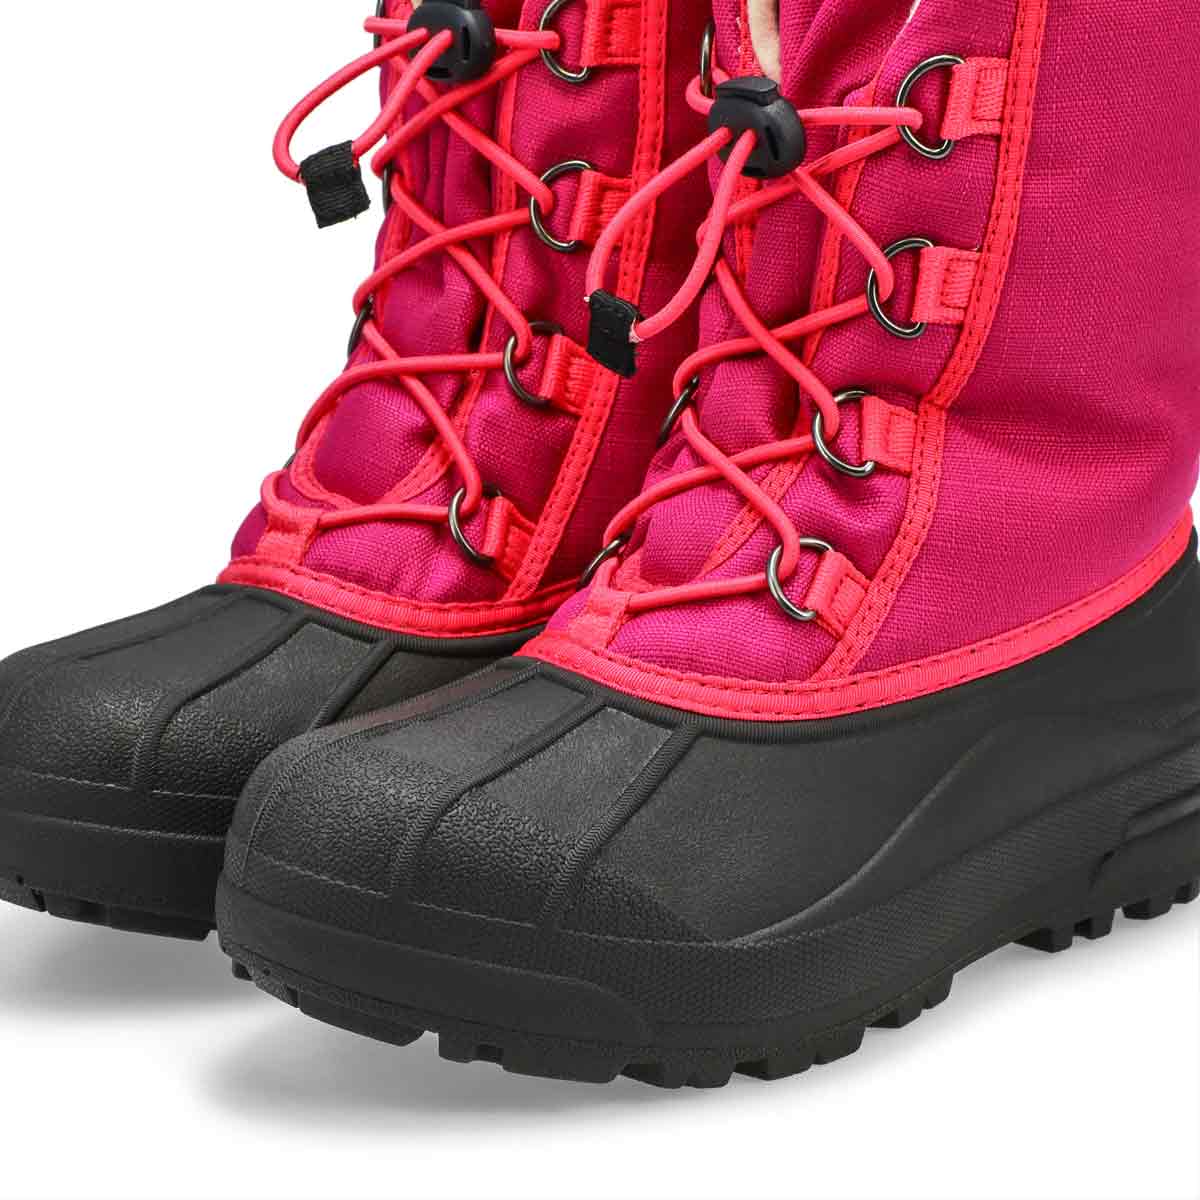 Girls' Cumberlan Waterproof Winter Boot